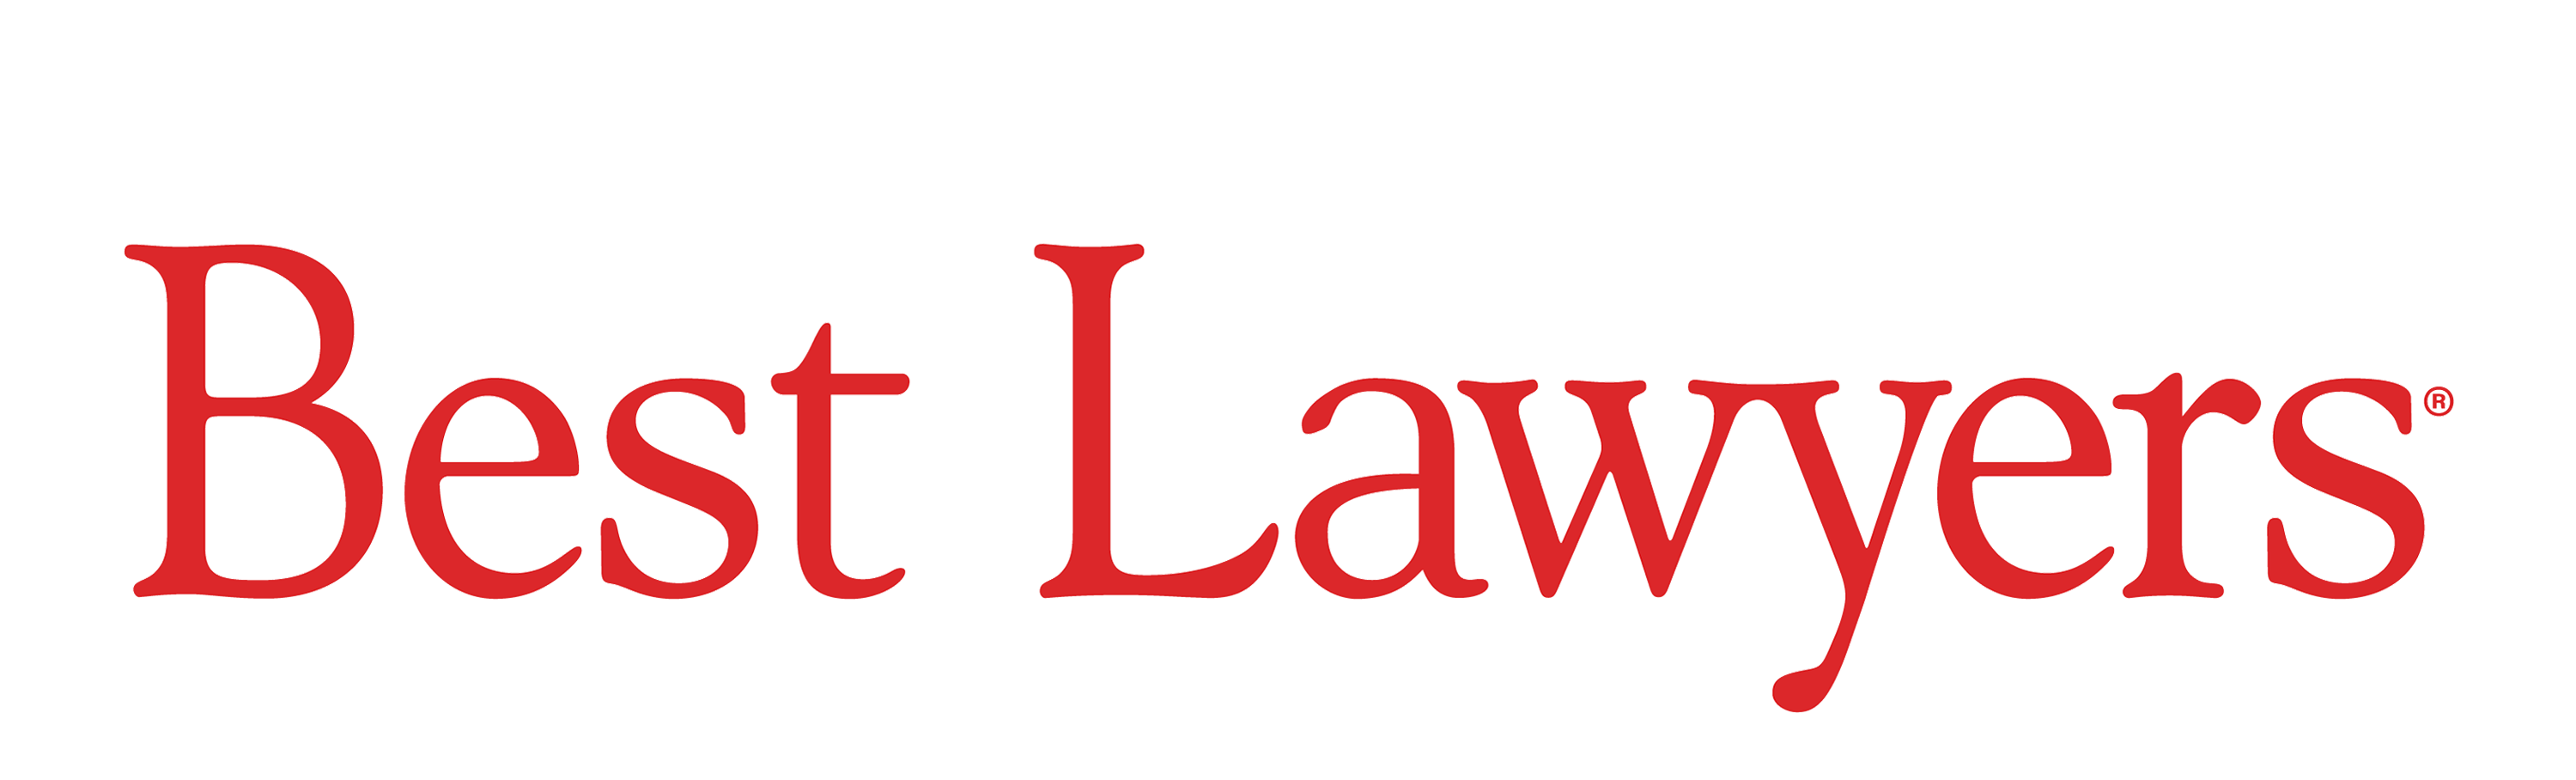 Key Murray Law Best Lawyers 2020